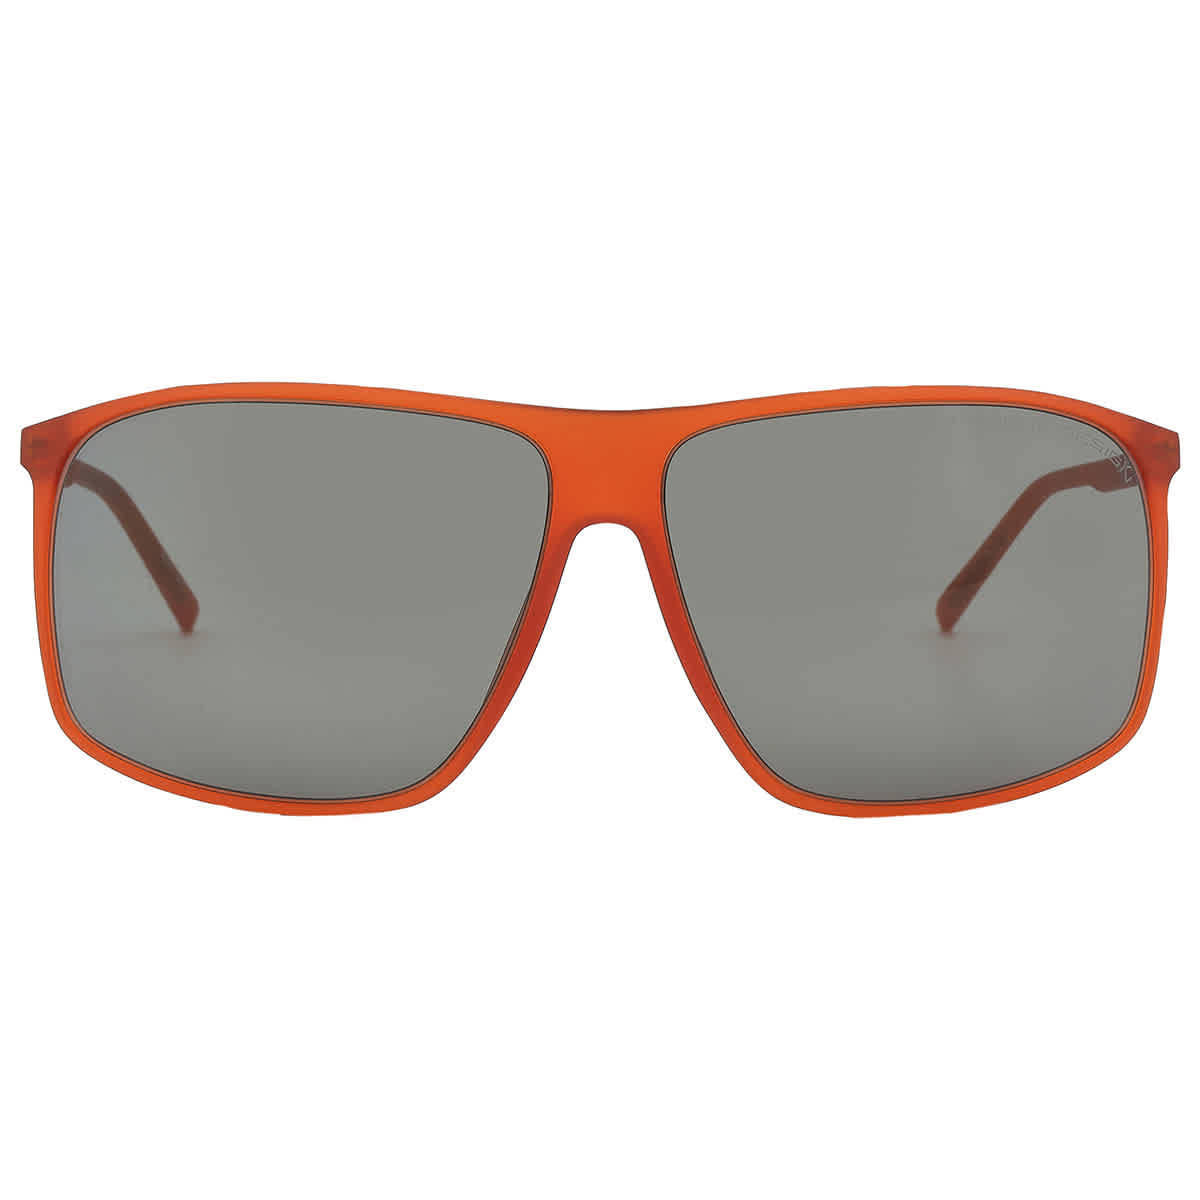 Porsche P8594-C-V578 Rectangular Men's Orange Frame Grey Lens Sunglasses NWT - image 1 of 2